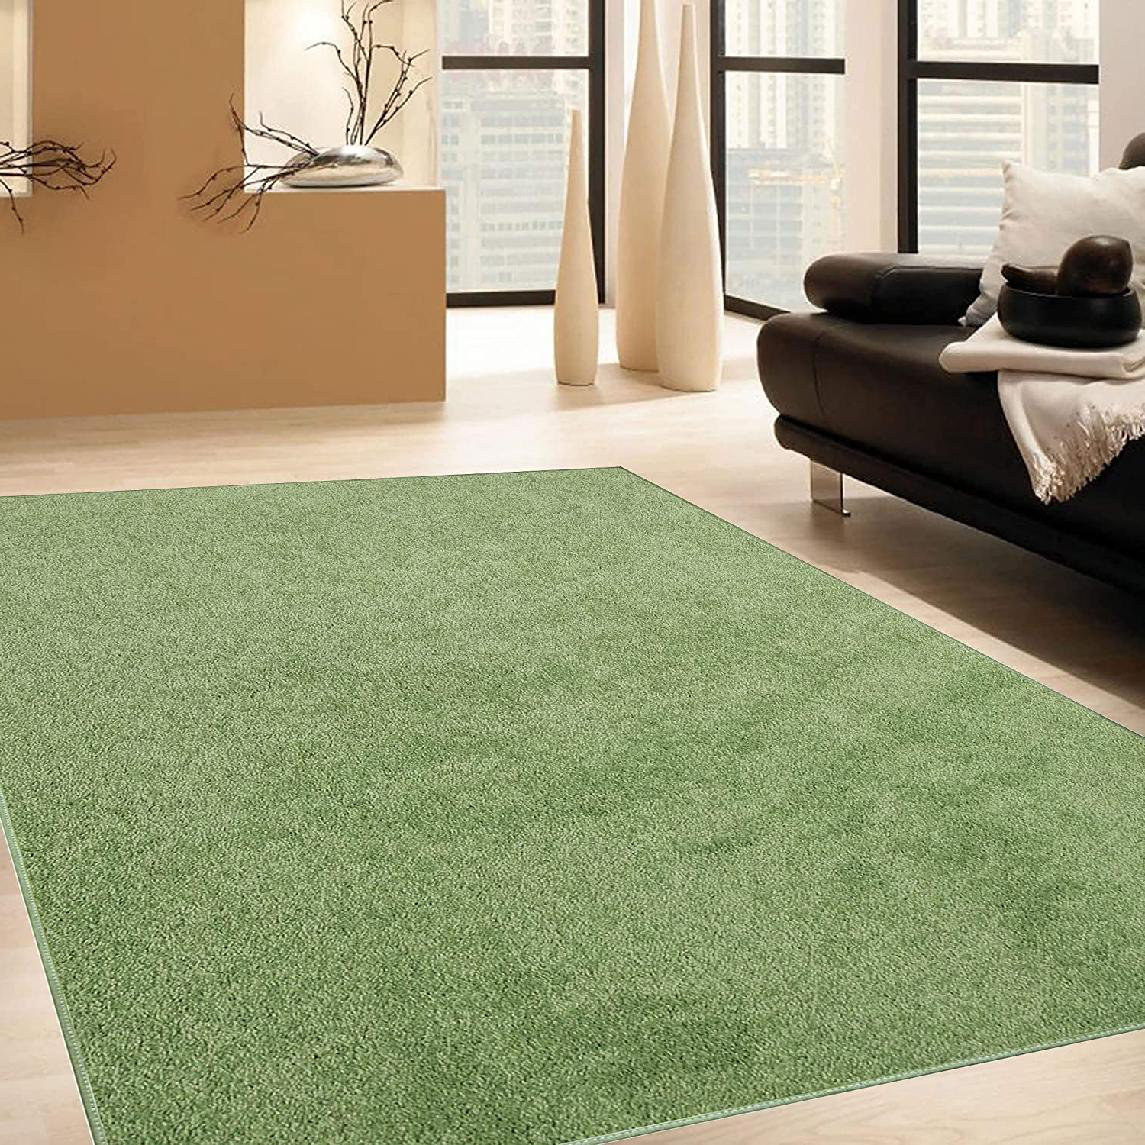 pale green carpet in room